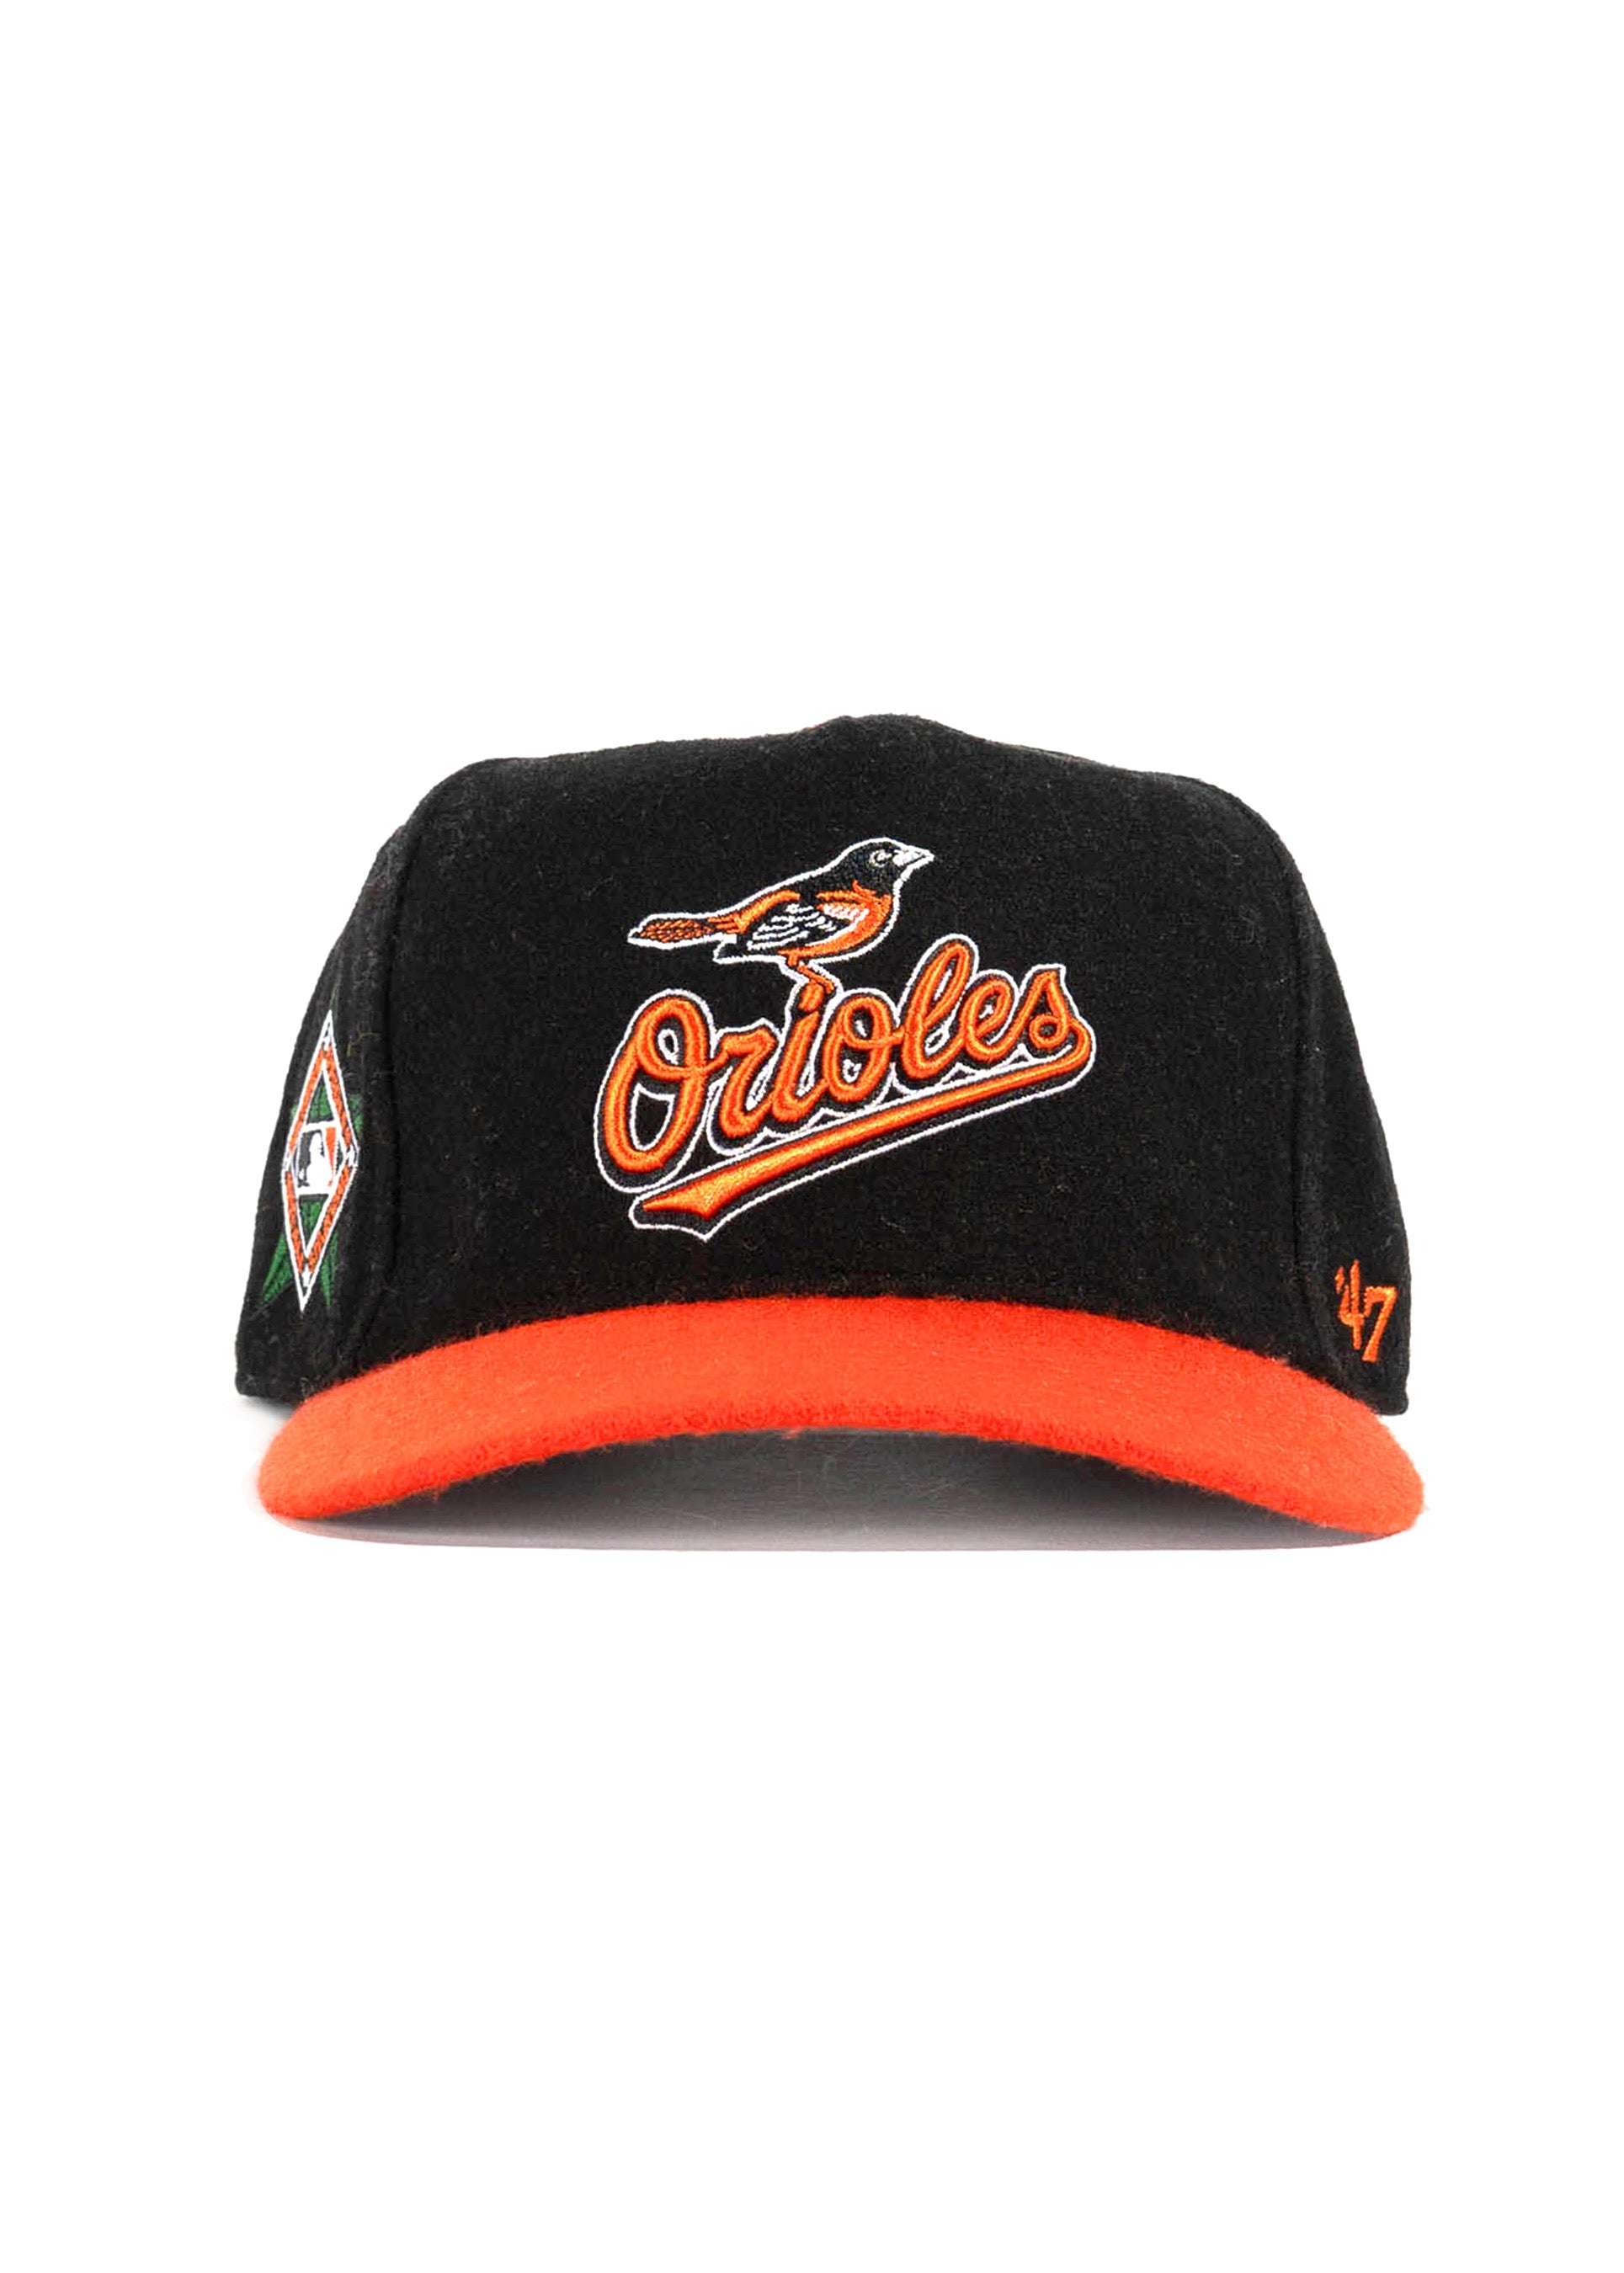 Orioles '47 HITCH - Black/Orange